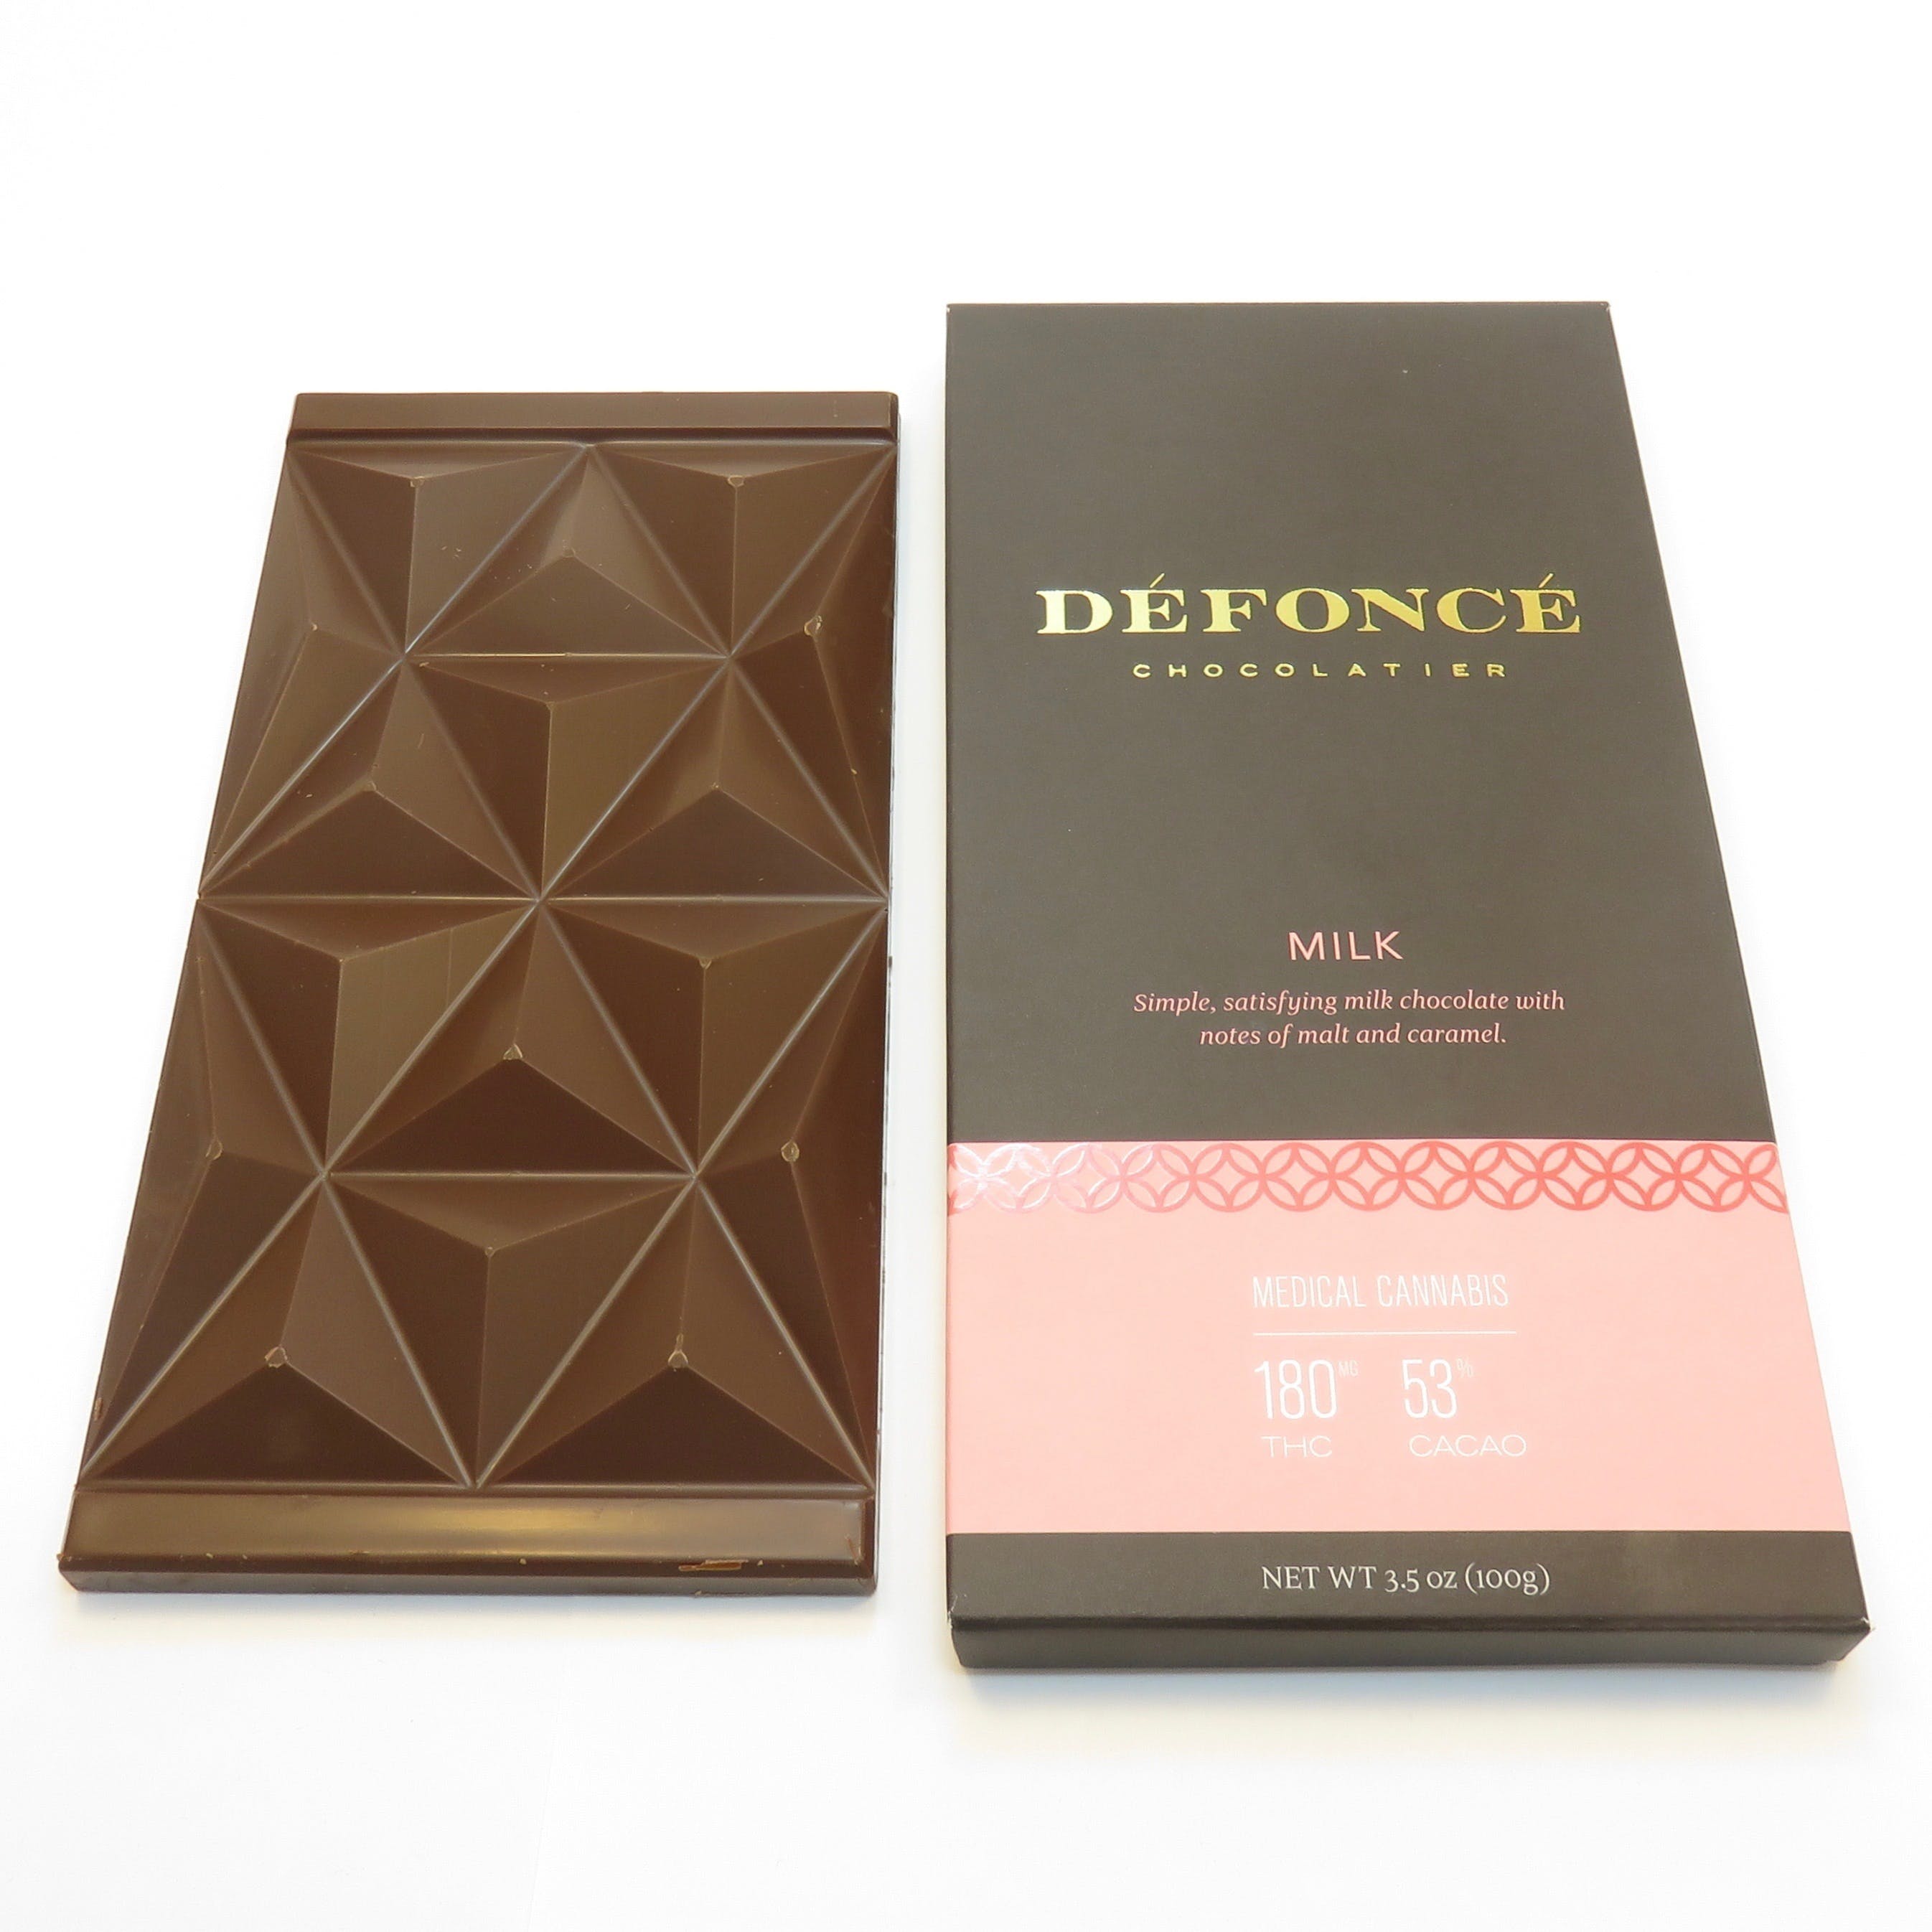 Defonce - 90mg THC - Milk Chocolate